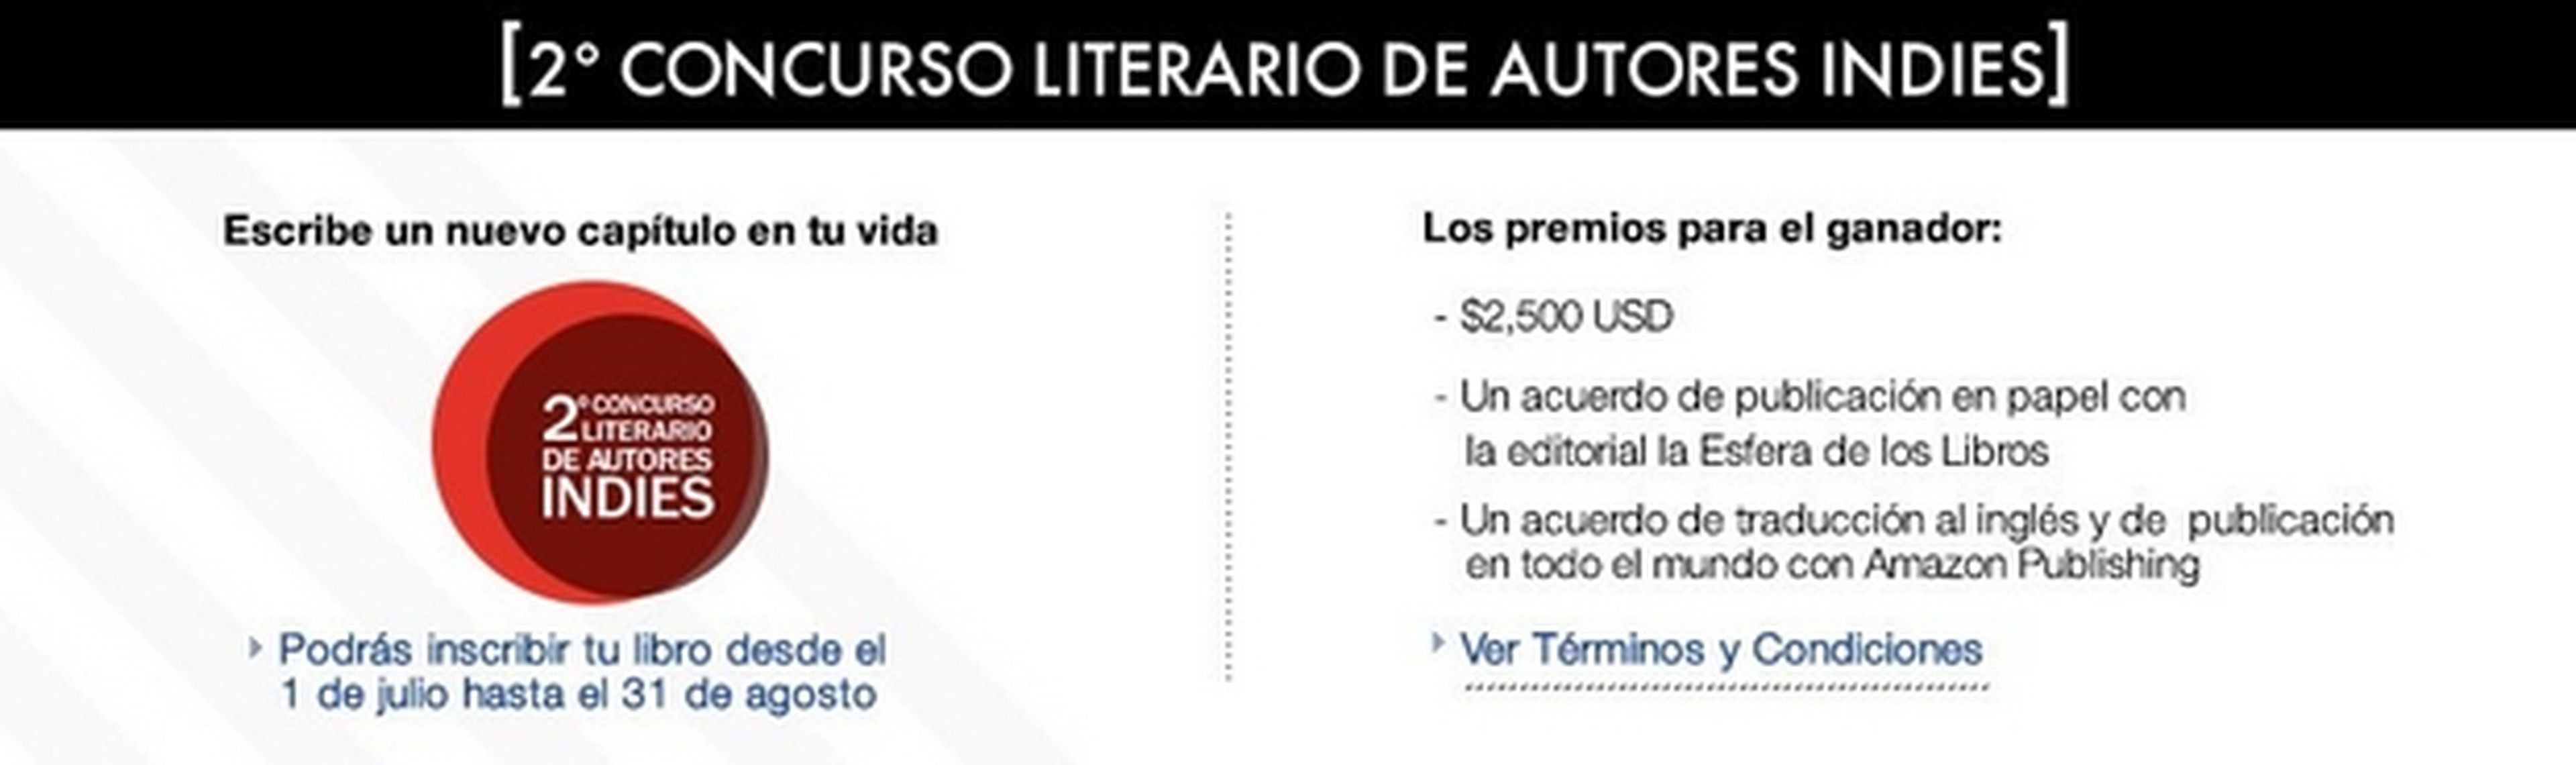 Concurso literario Amazon